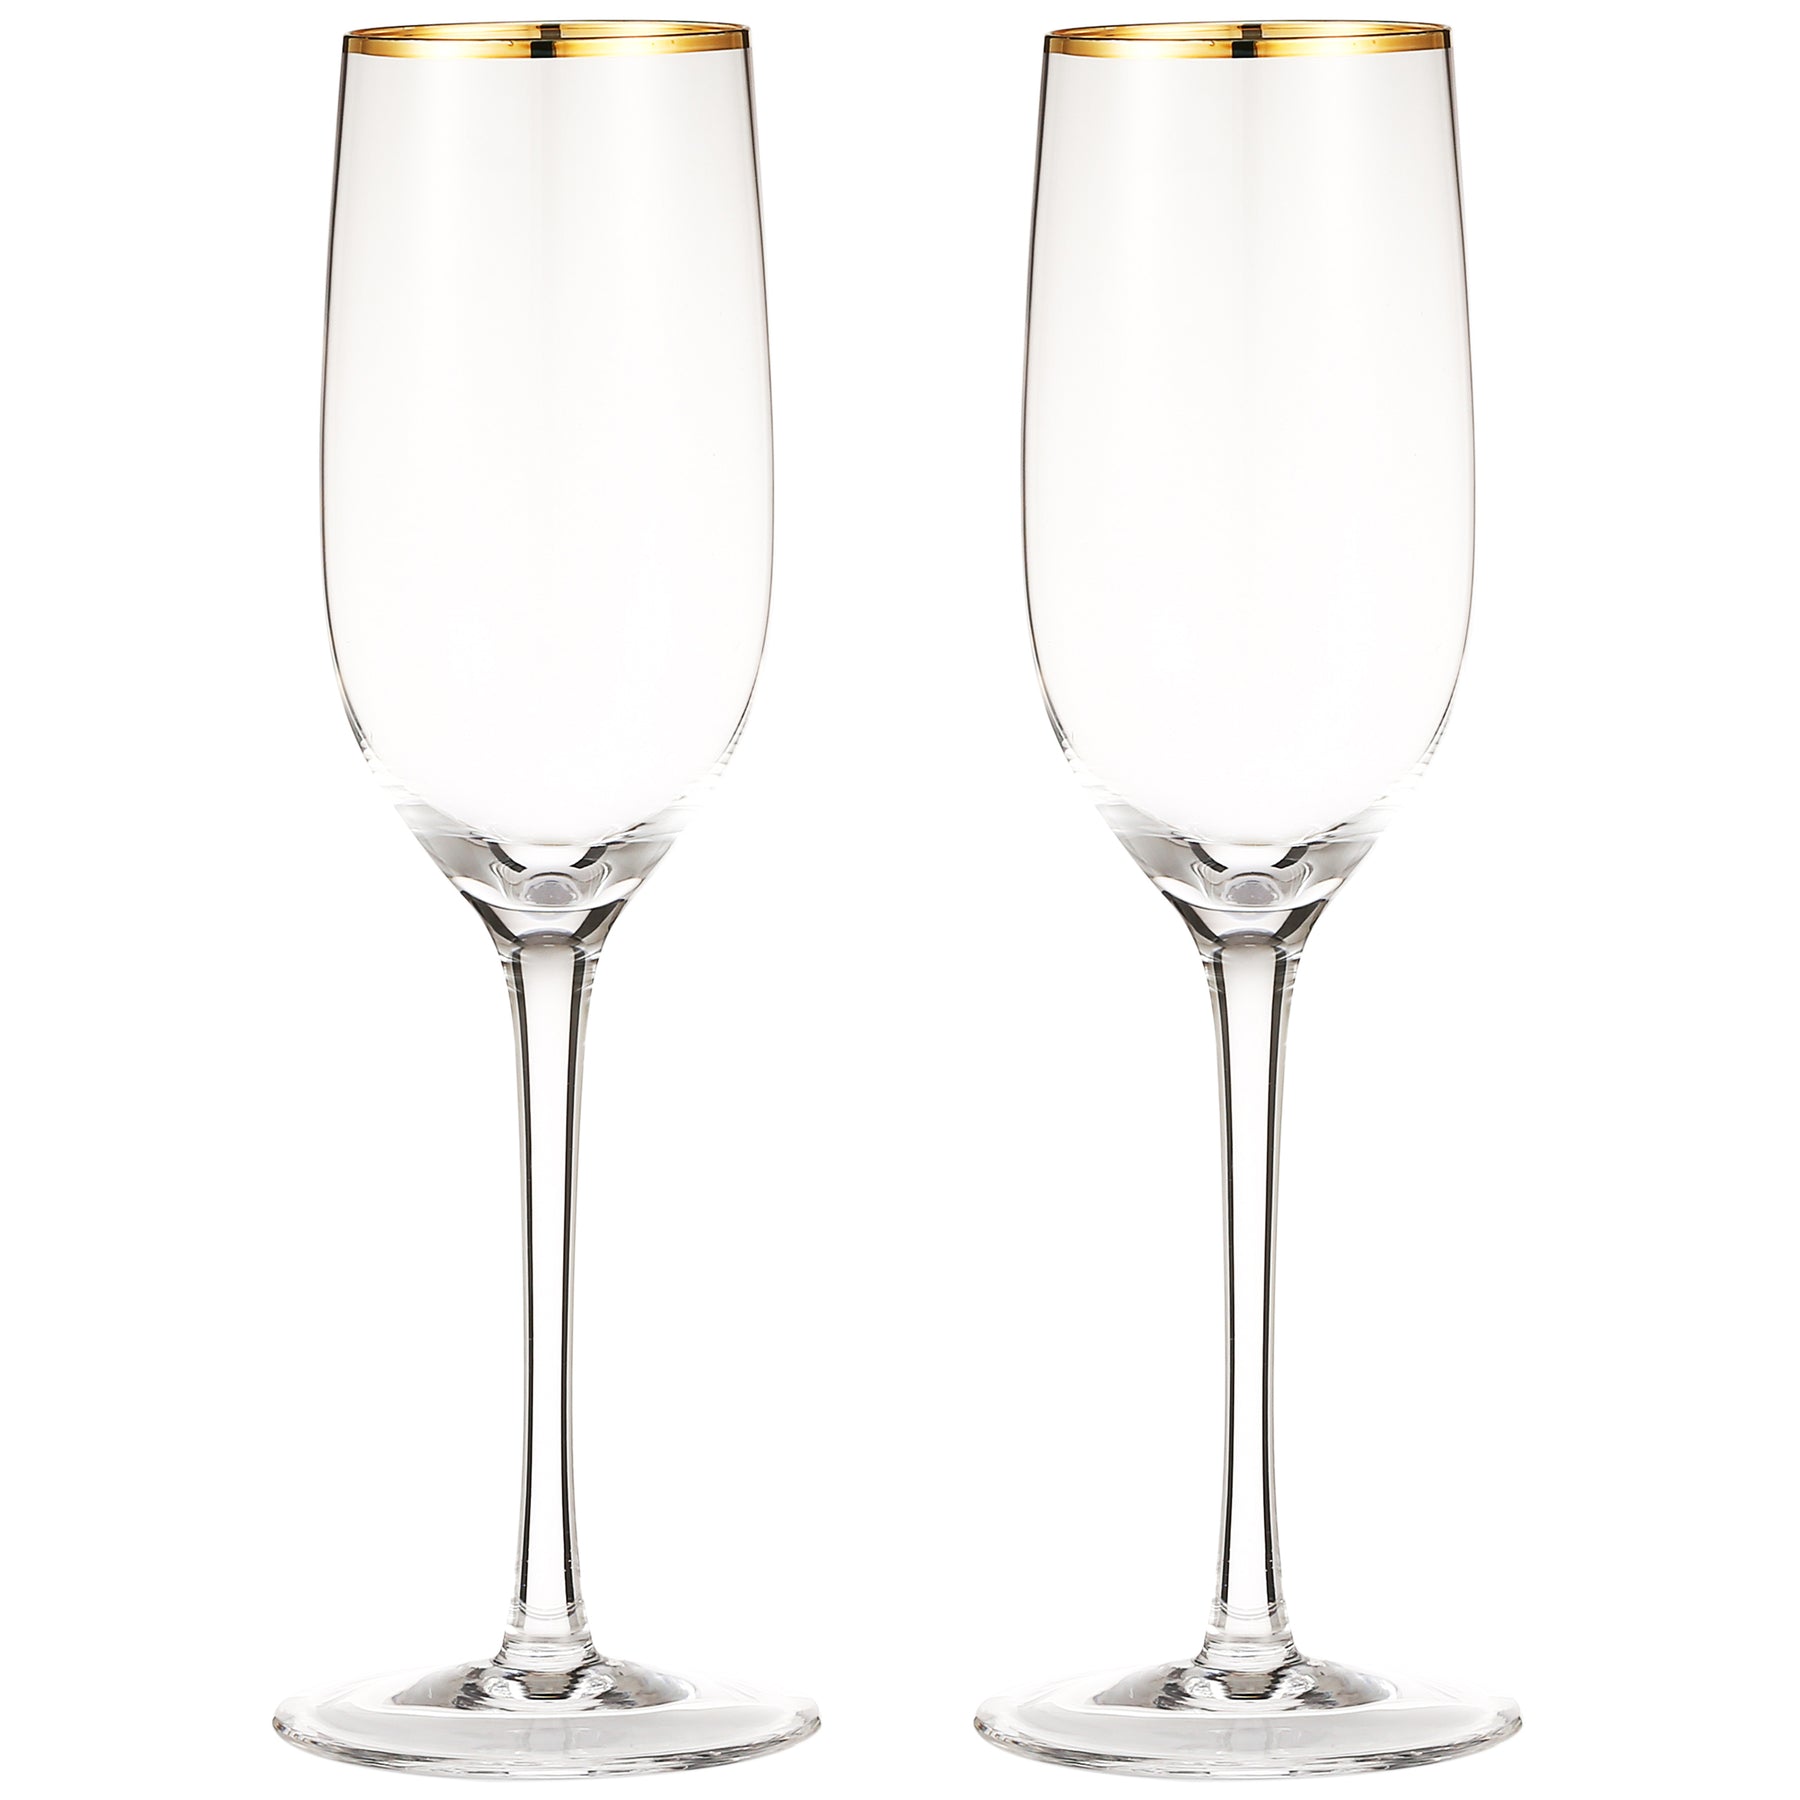 Berkware Premium Champagne Trumpet Flutes - Crystal Champagne Glasses with Gold Rim & Gold Dazzling Rhinestone Design - 9oz Each (Set of 6)